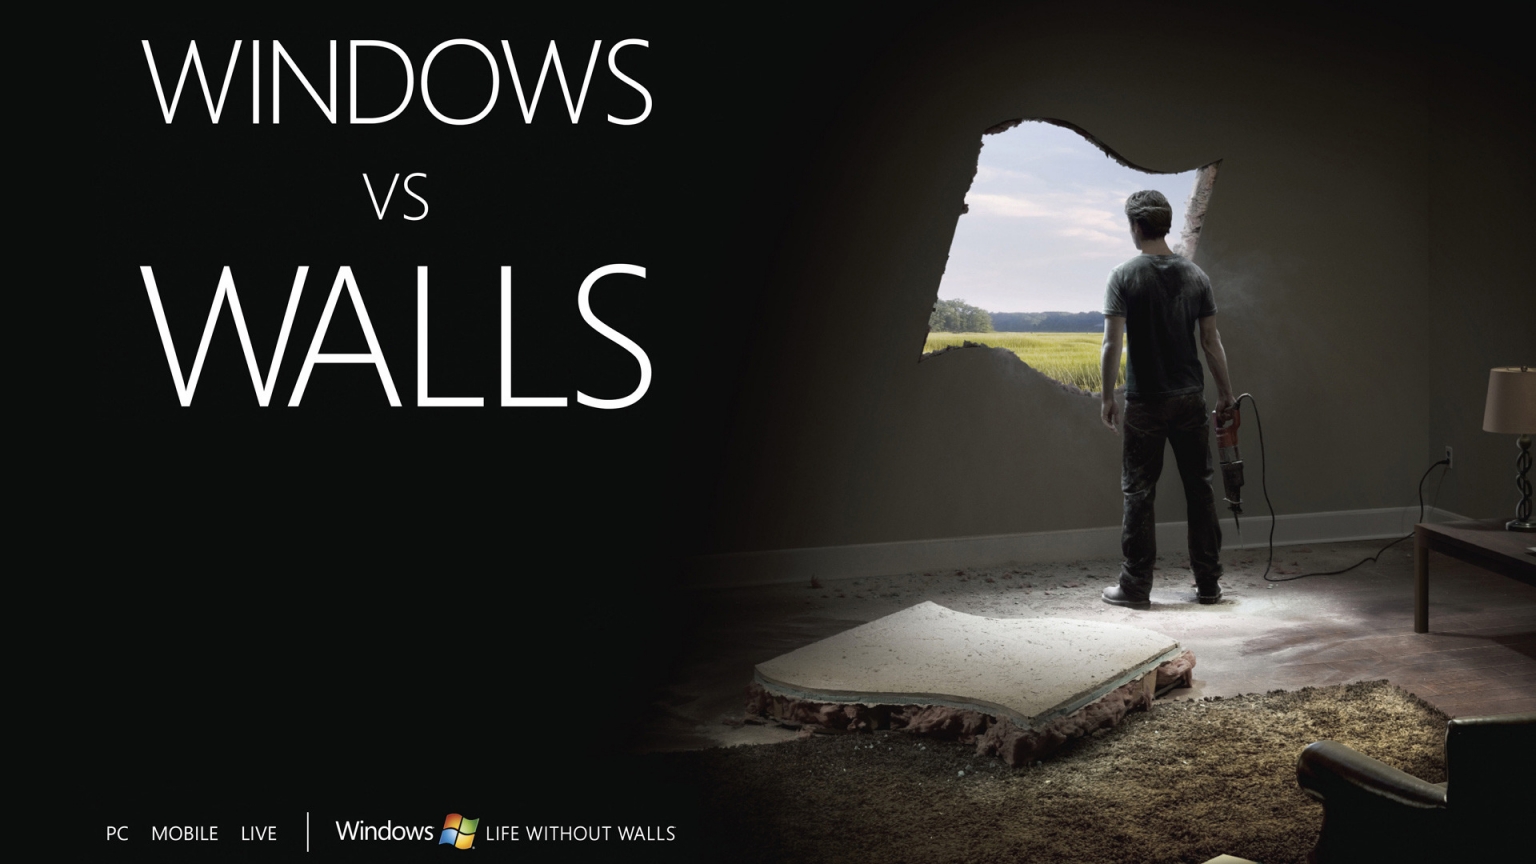 Windows vs Walls for 1536 x 864 HDTV resolution